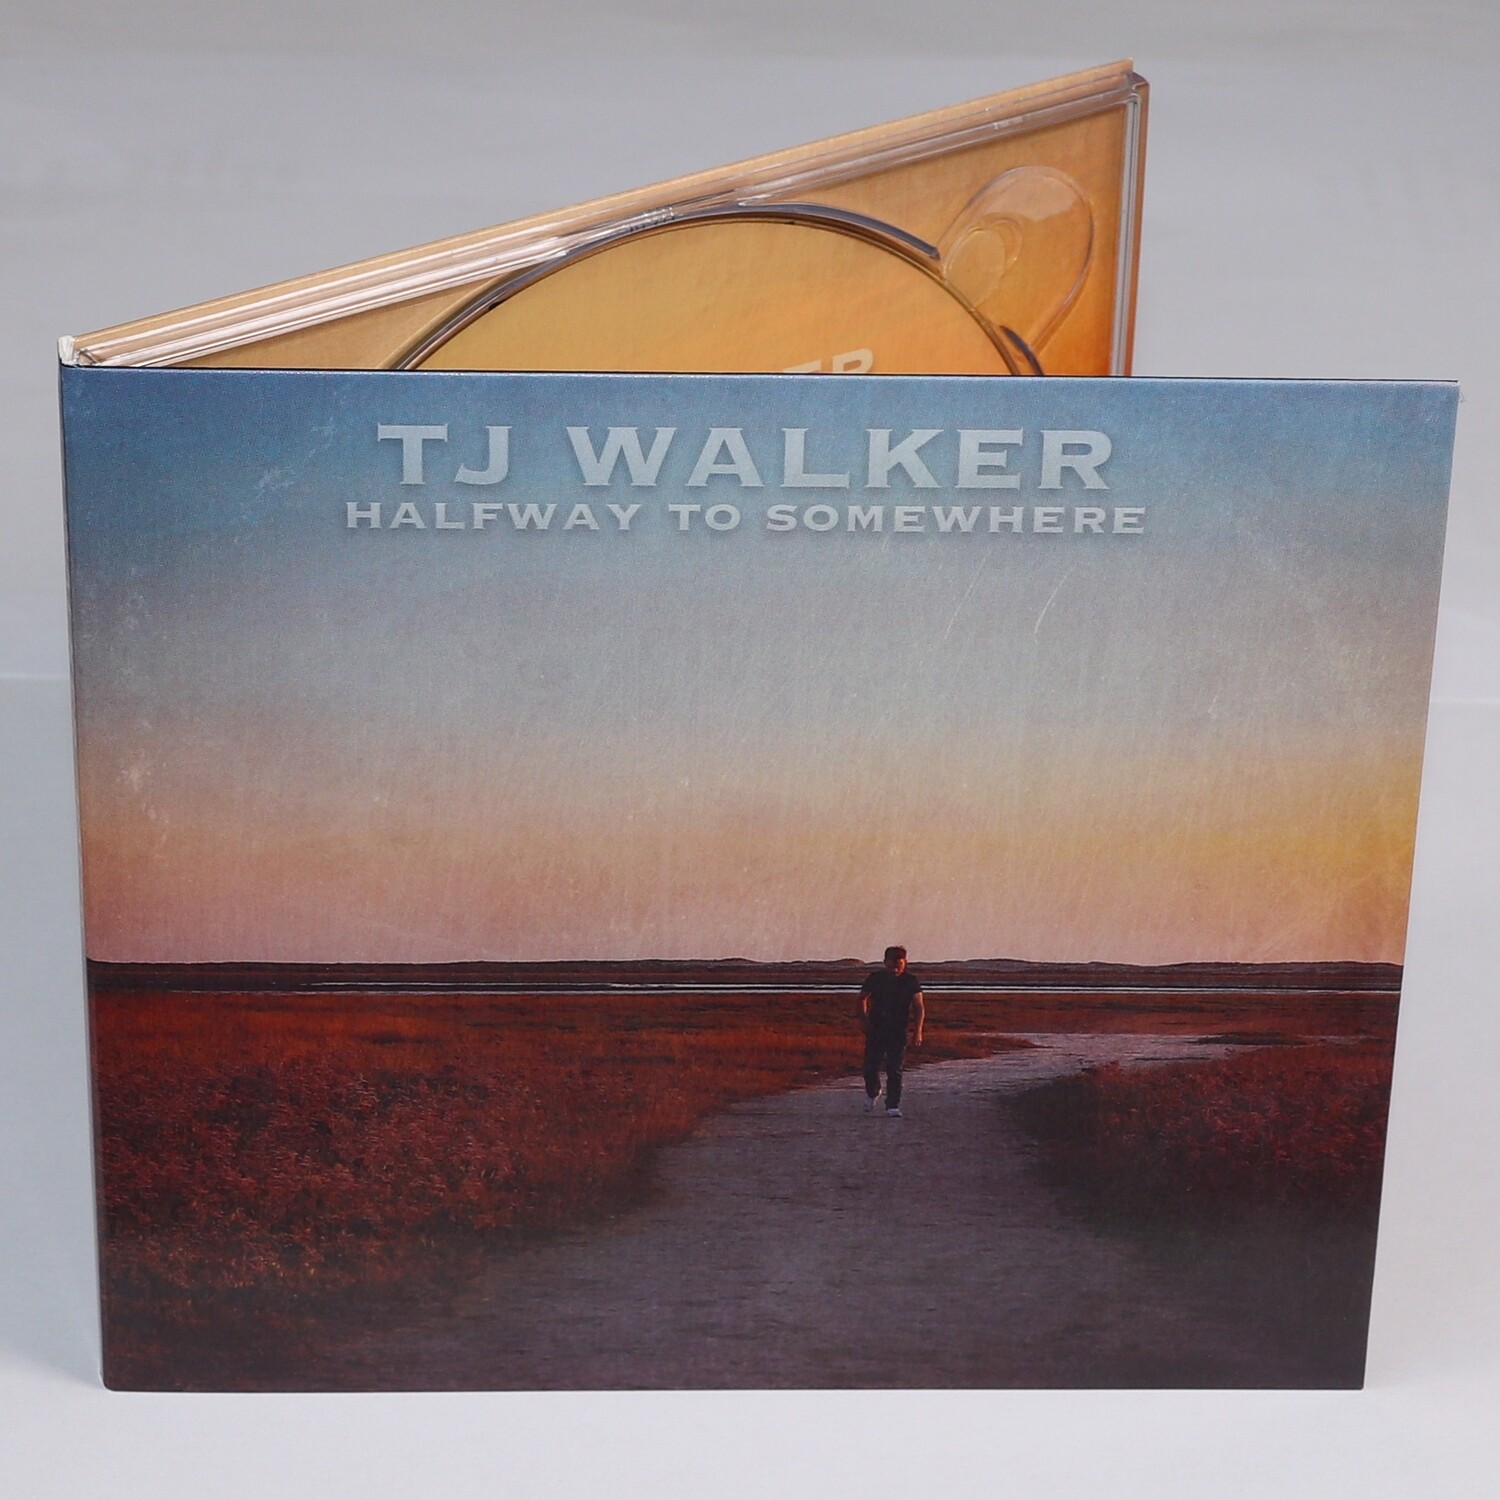 **BRAND NEW**  Halfway to Somewhere - TJ Walker CD Album - FREE Shipping